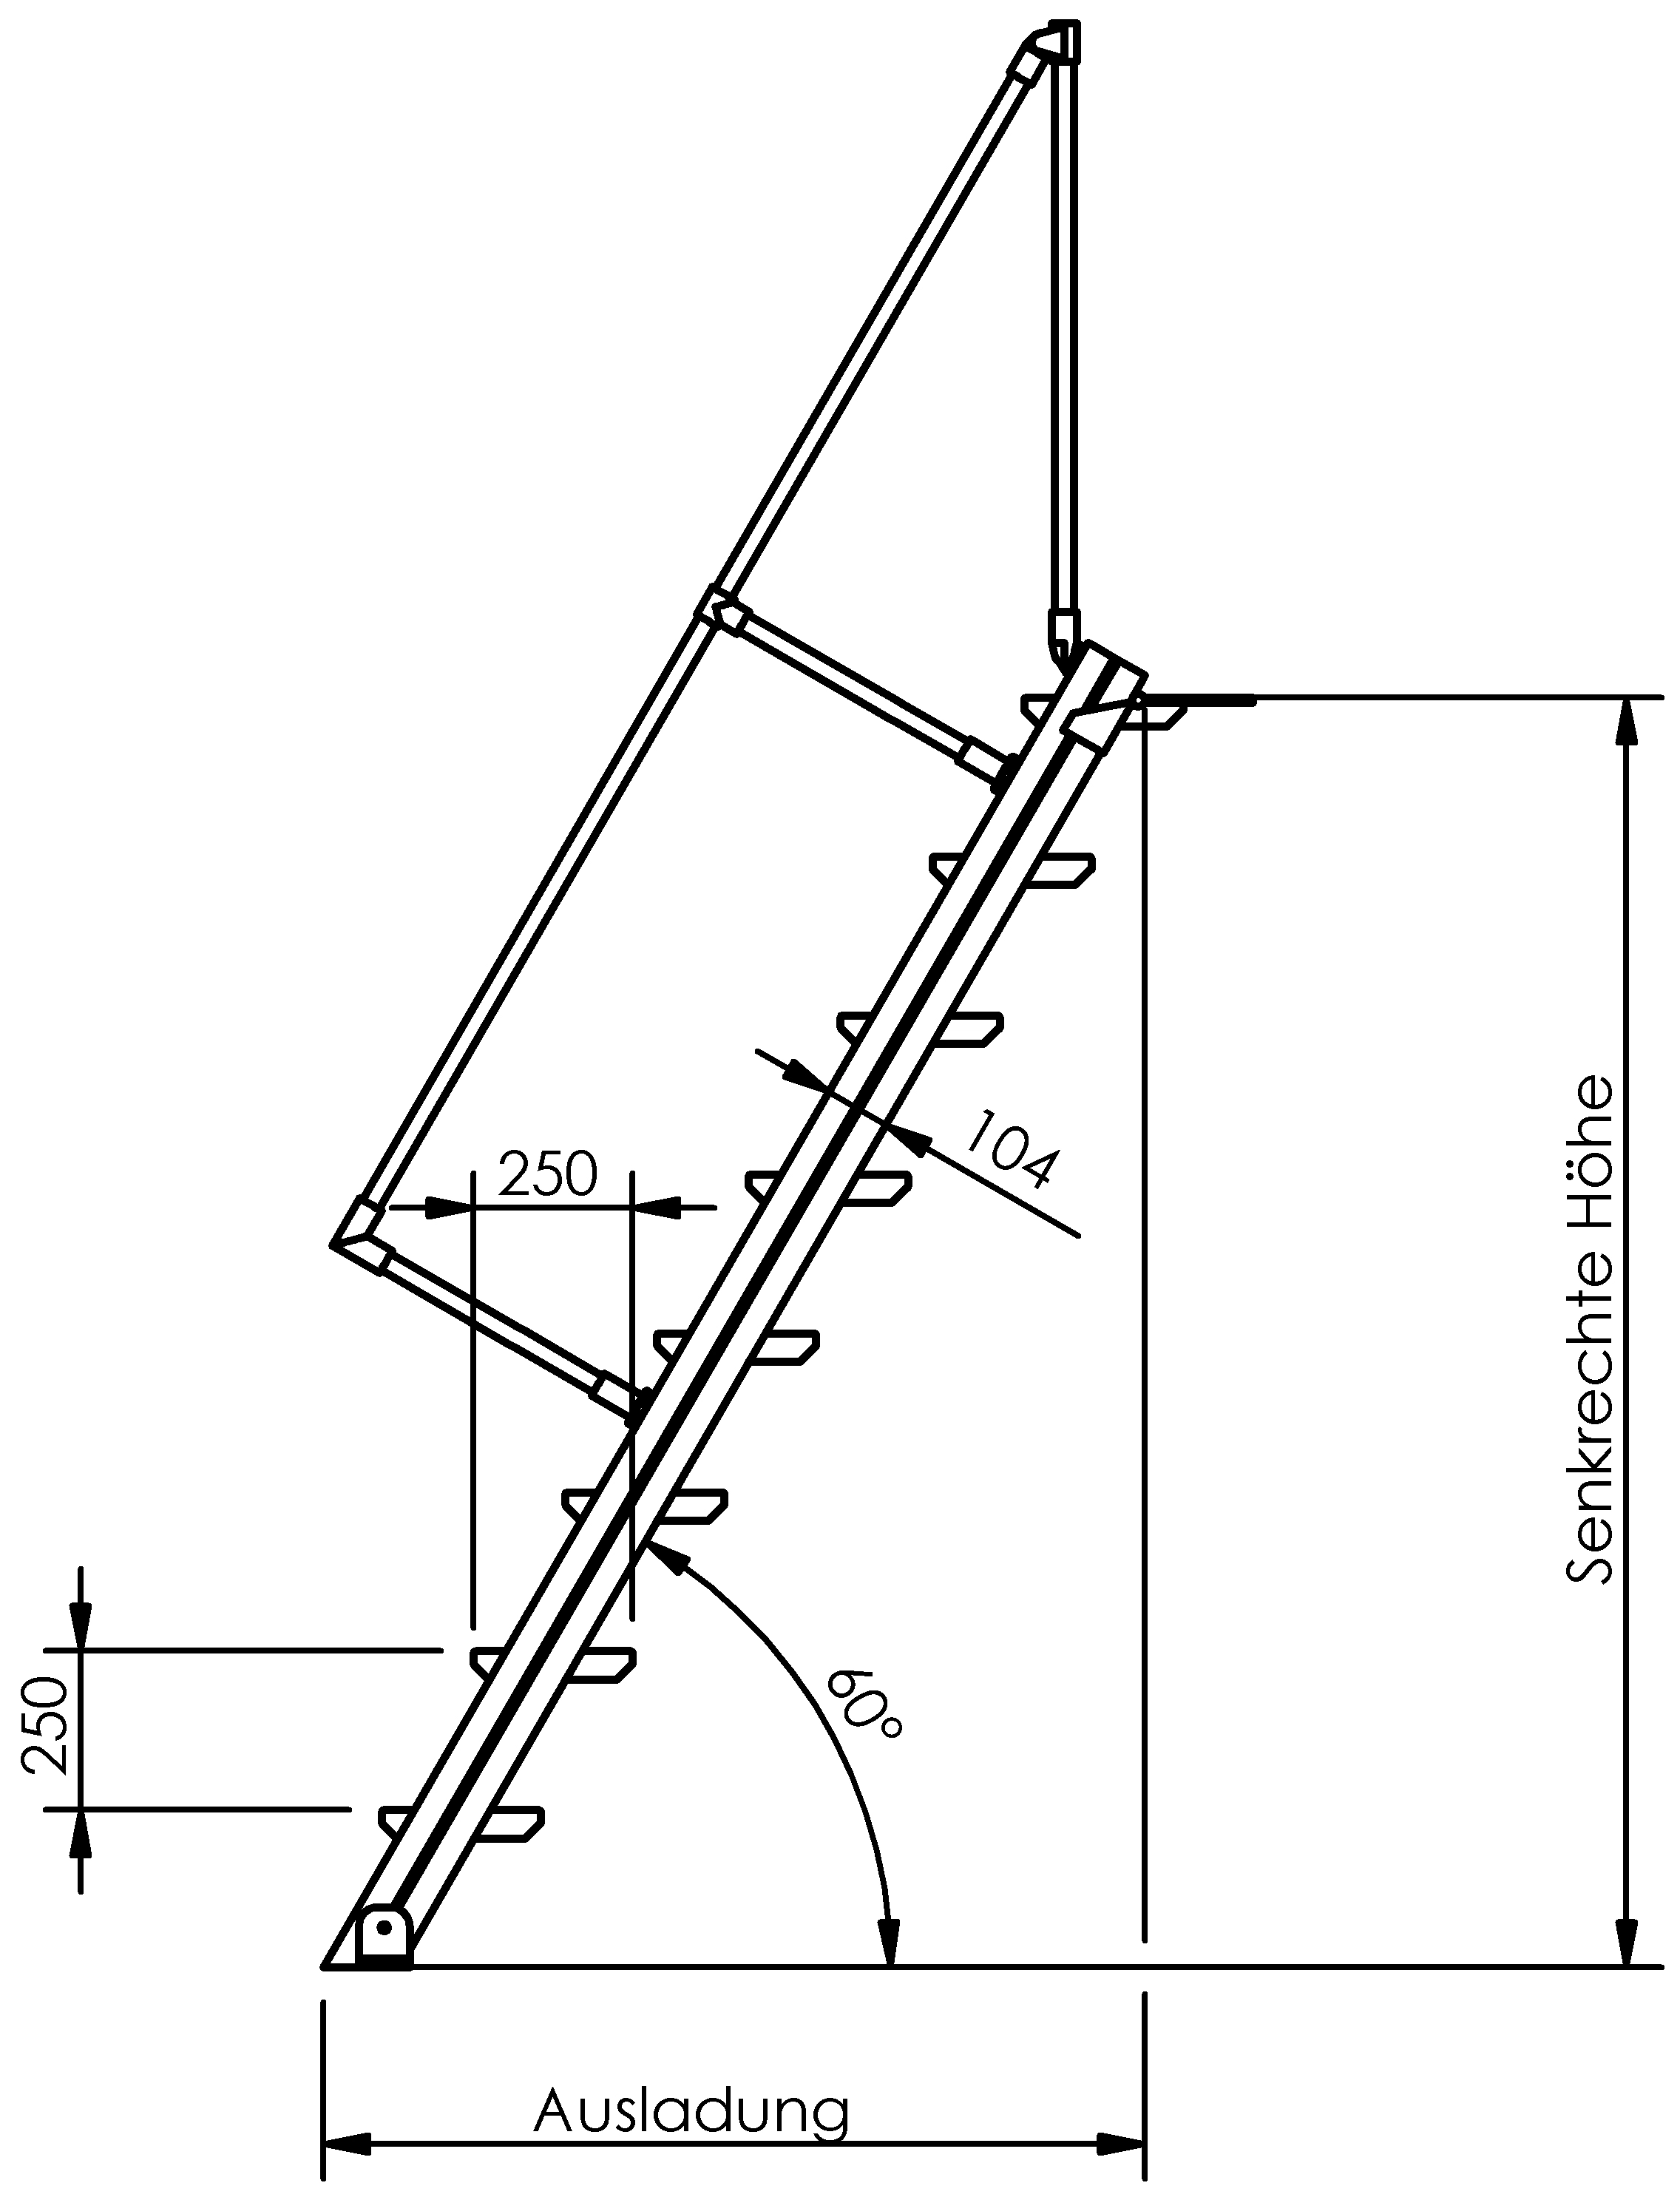 Selbstbautreppen, LW 1000, Stufen aus Alu, Neigung 60°